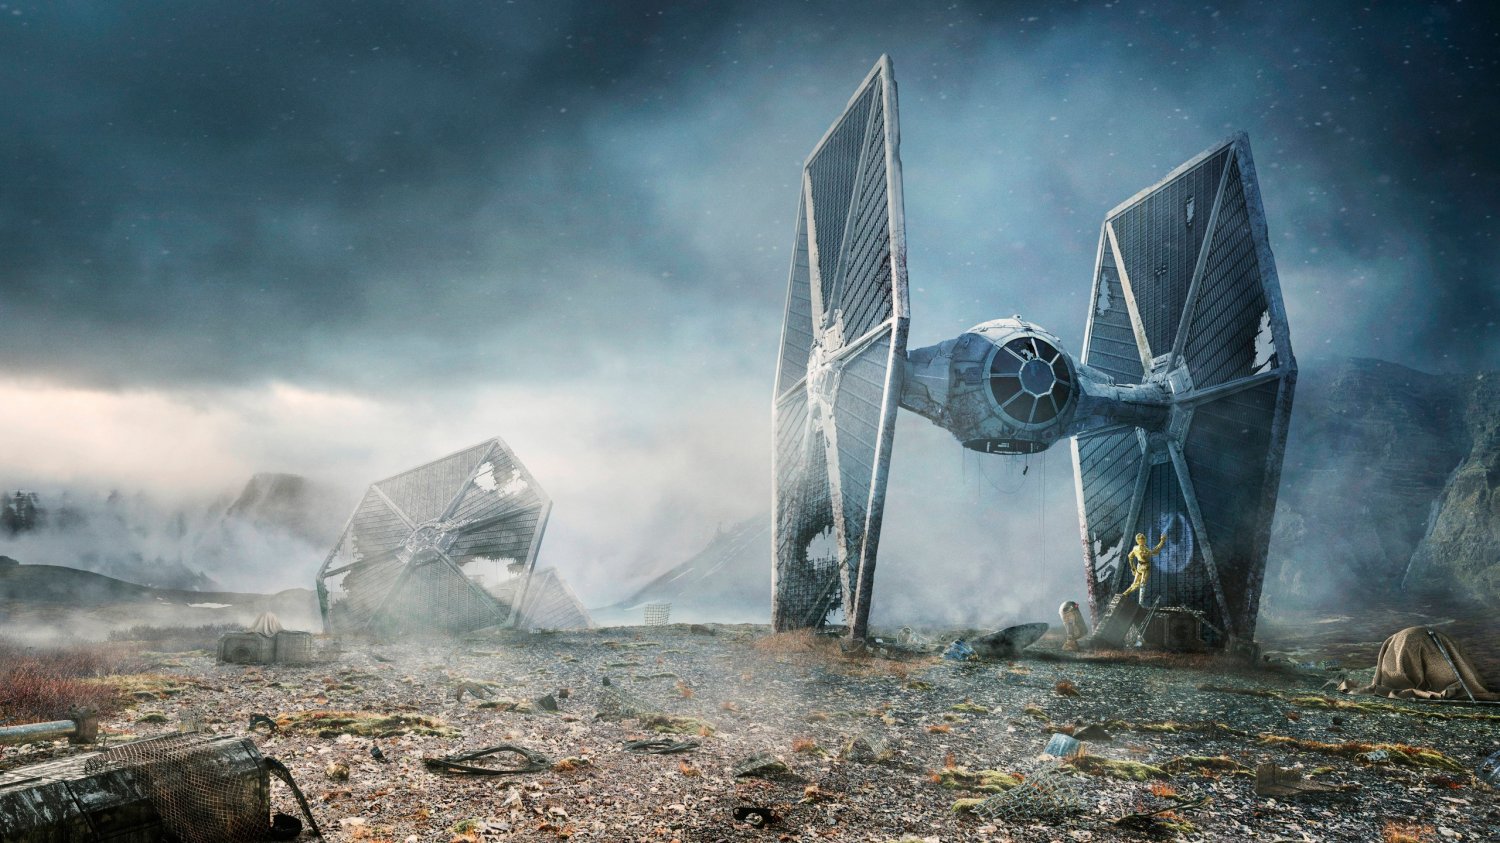 Star Wars The Force Awakens Tie Fighter Movie 13"x19" (32cm/49cm) Poster